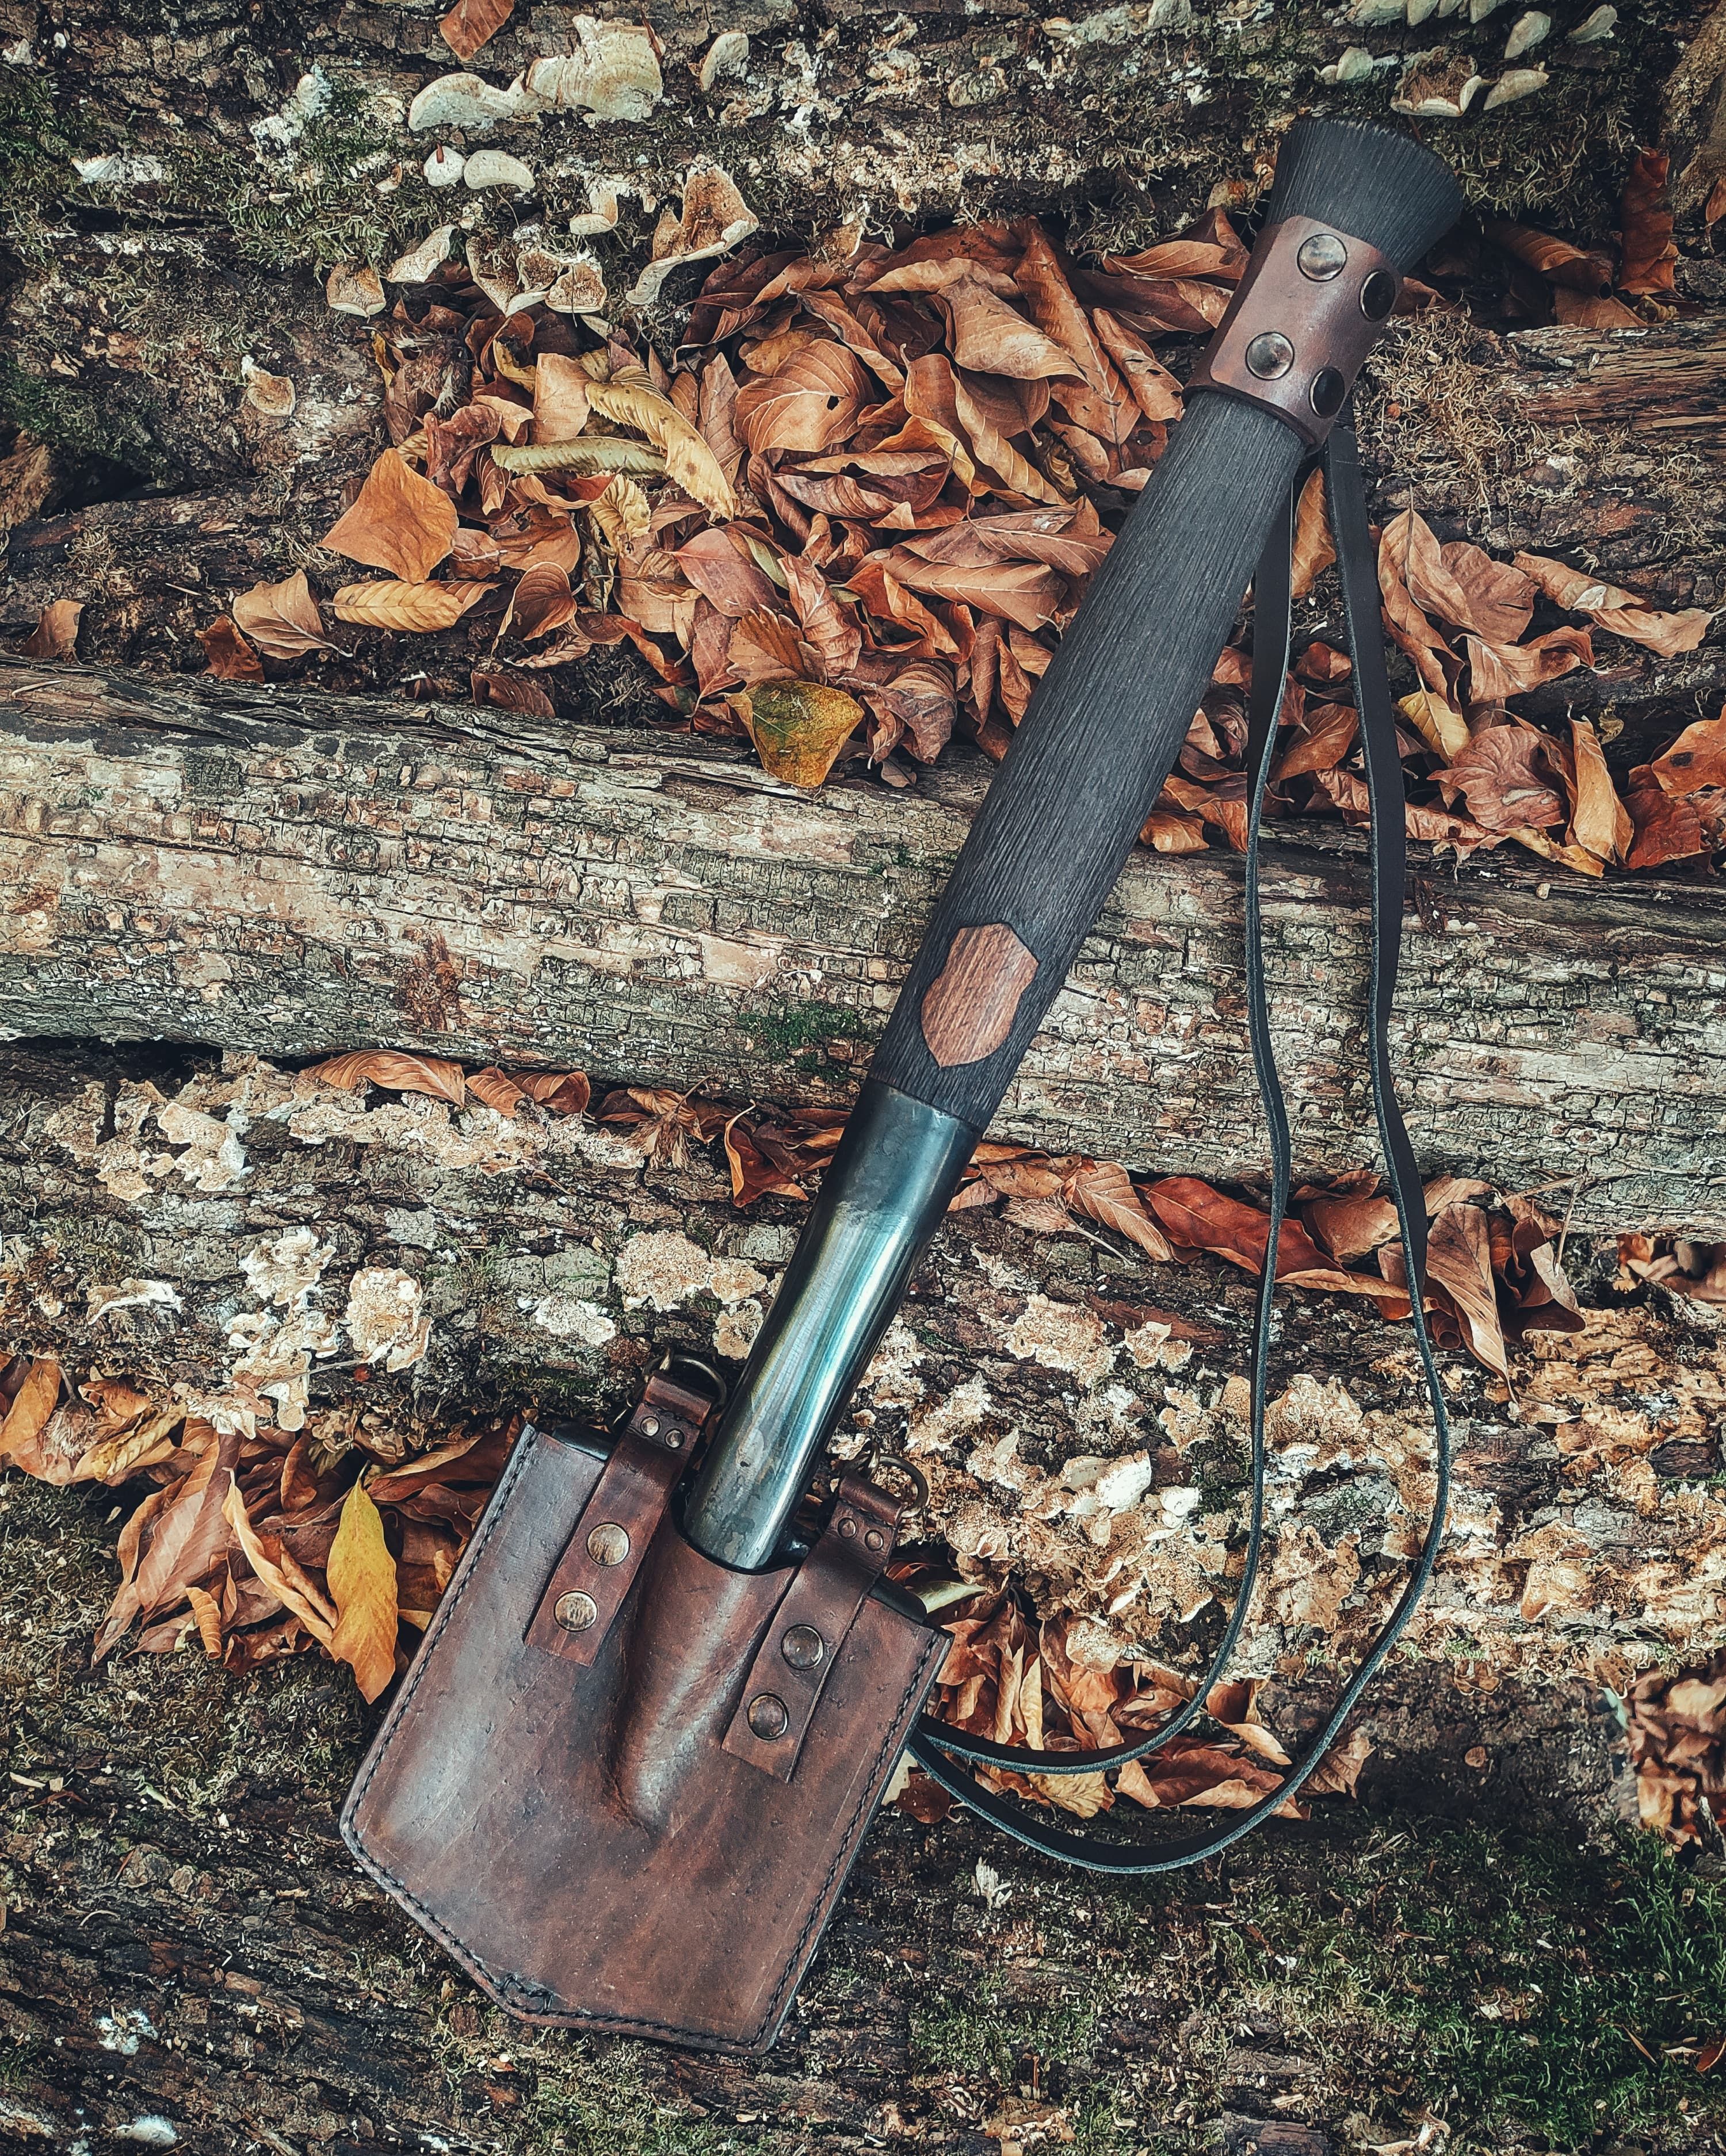 Blacksmith handforged survival shovel